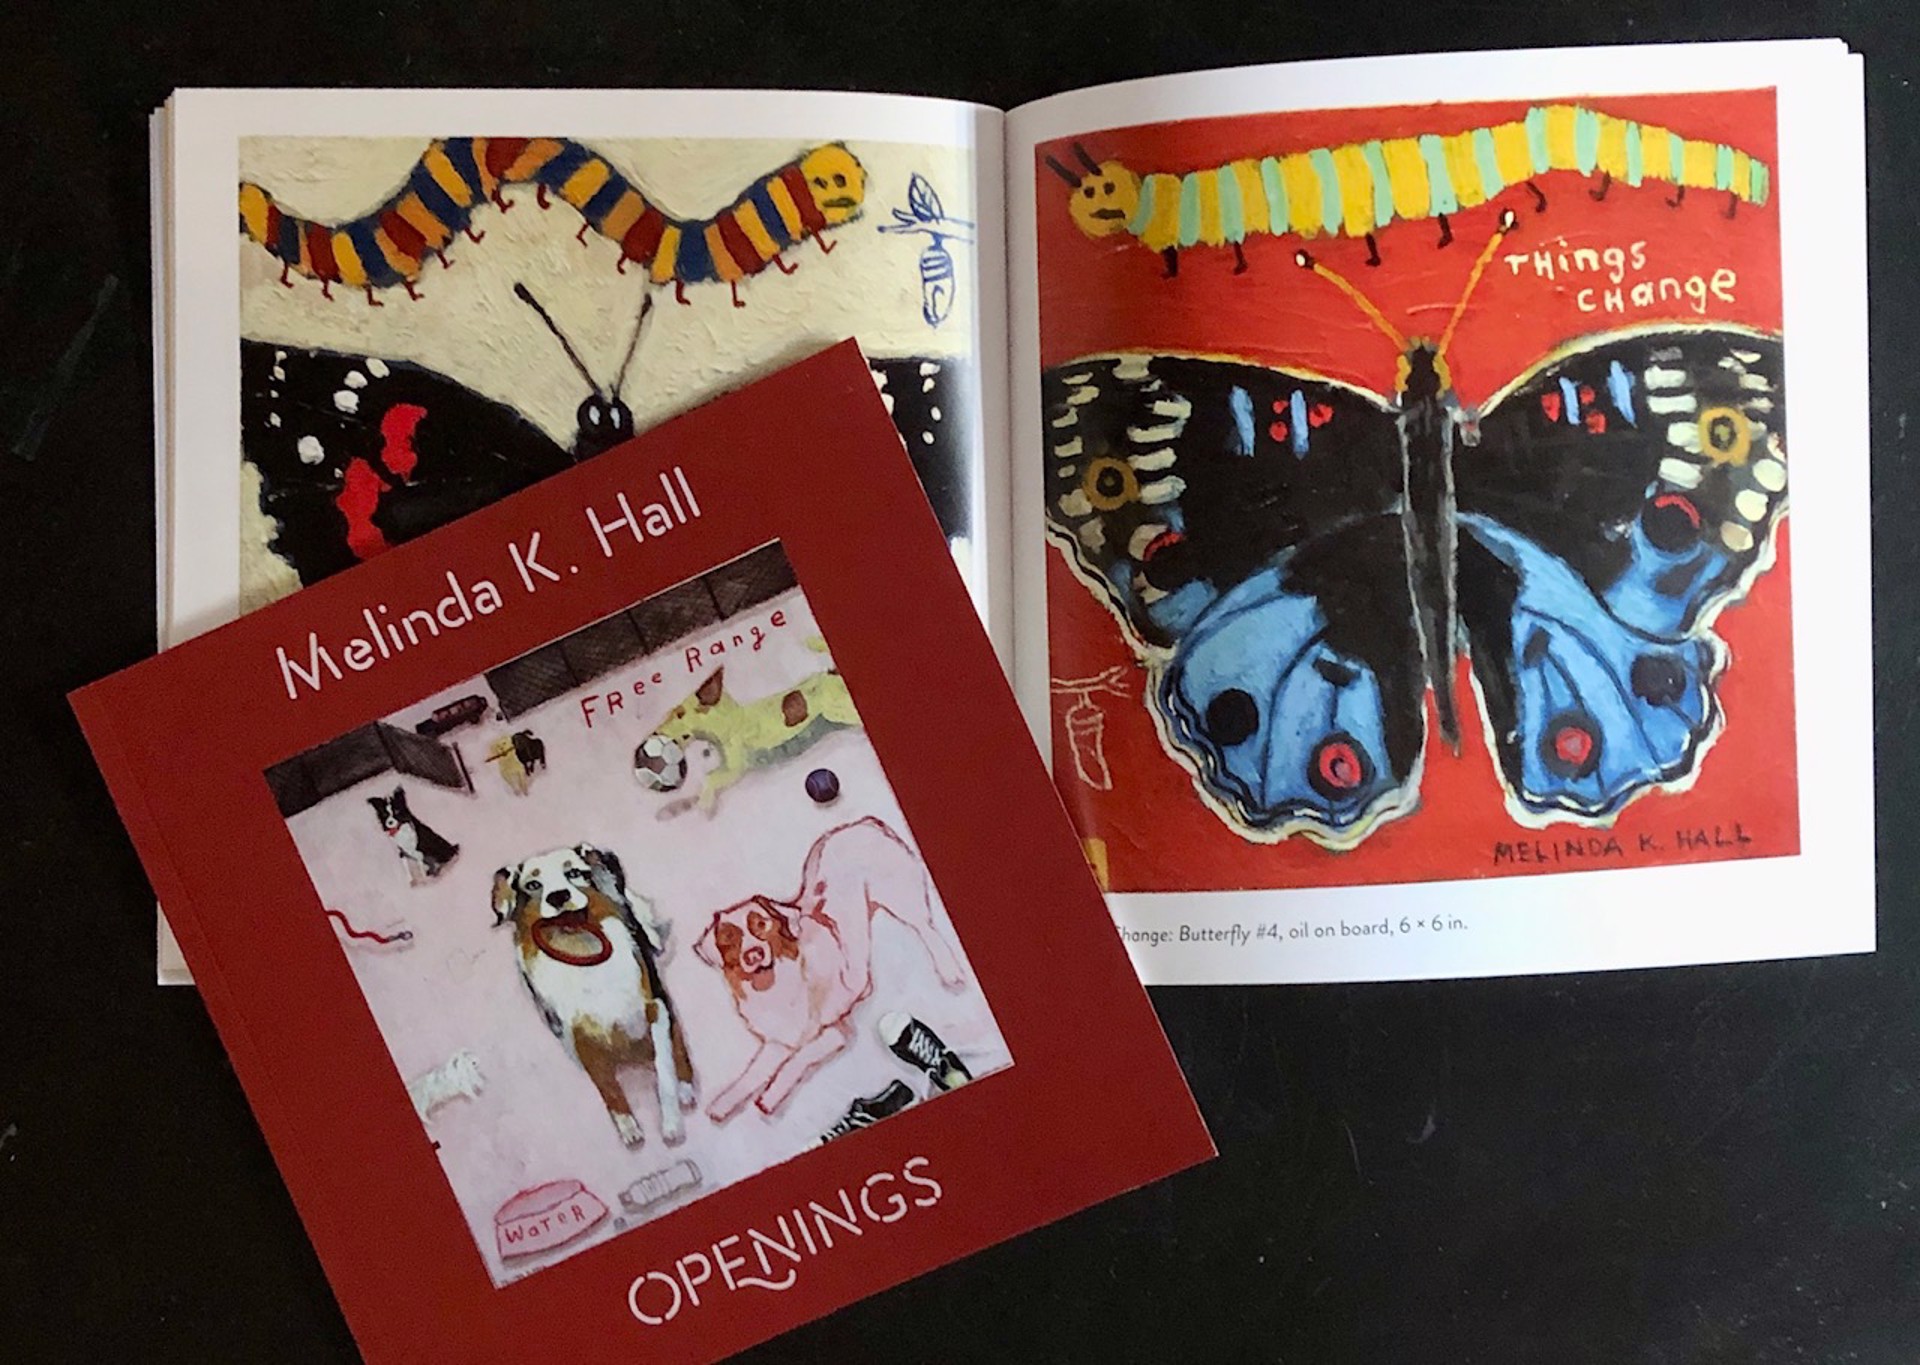 Melinda K. Hall "Openings" Catalog by Melinda K. Hall